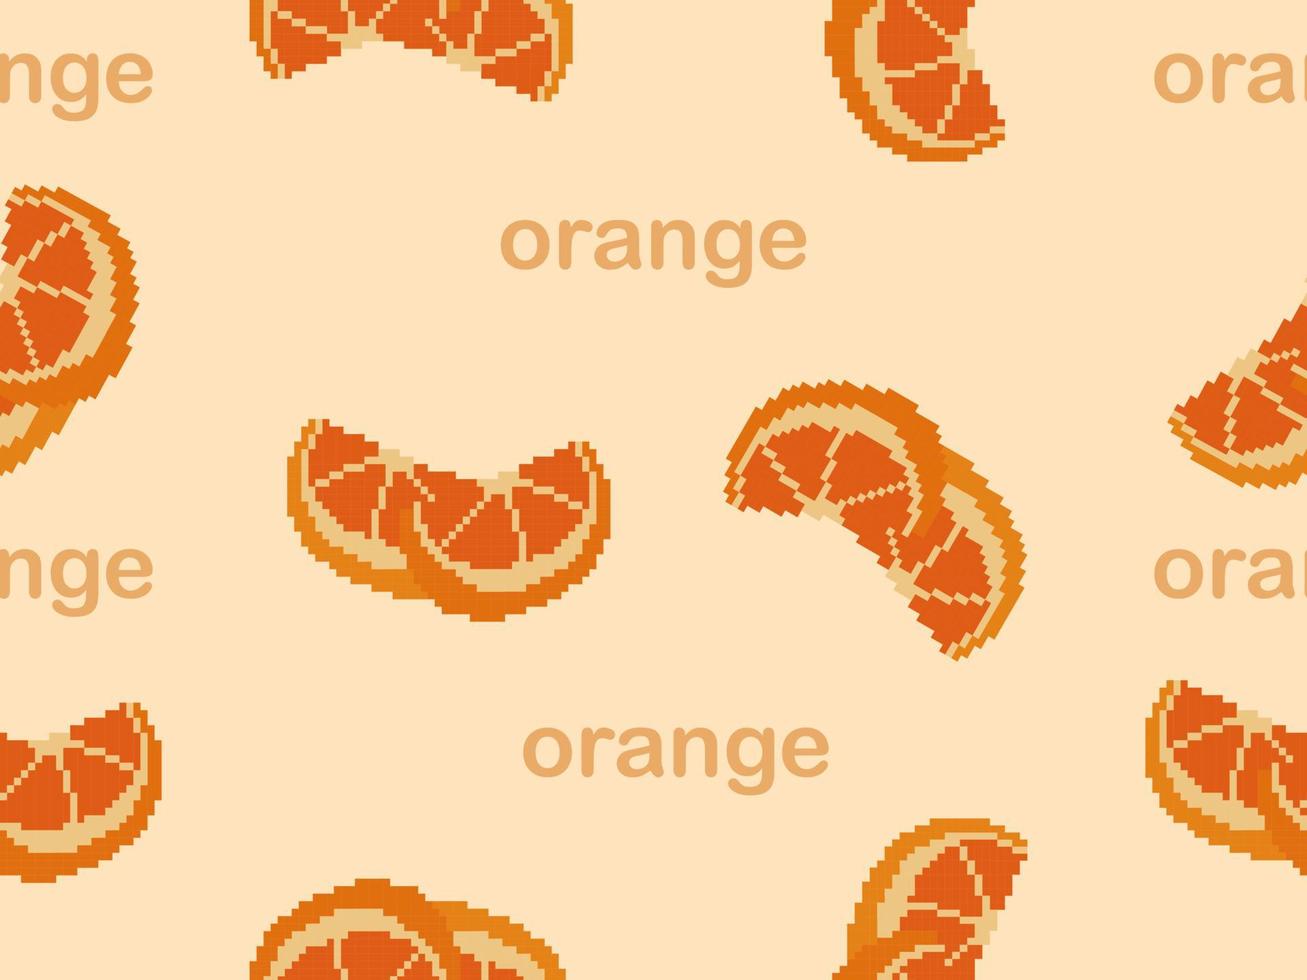 Orange cartoon character seamless pattern on orange background.Pixel style vector